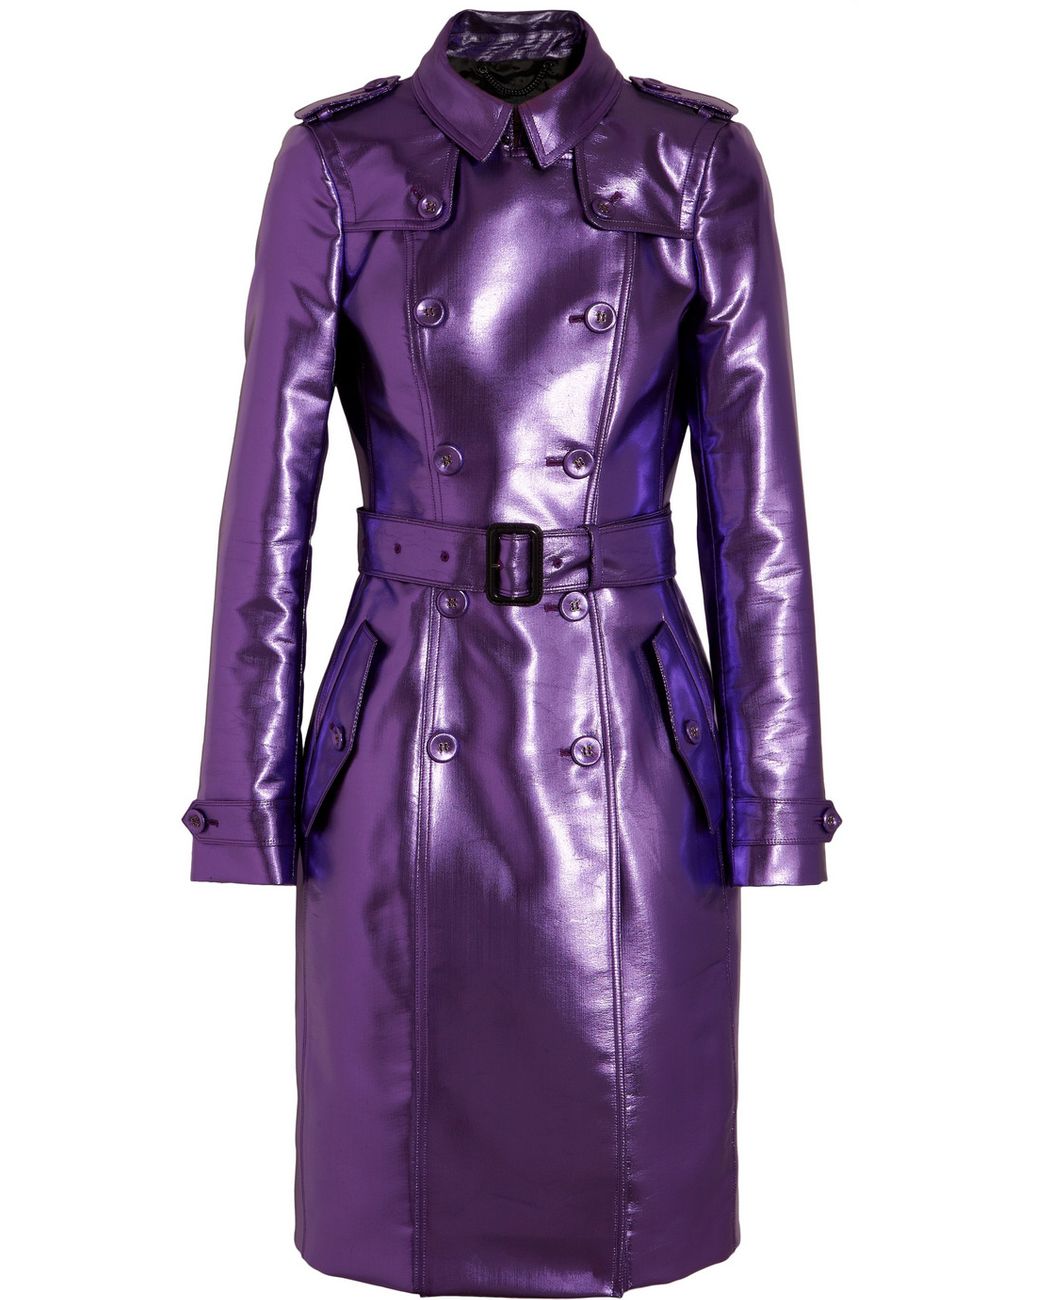 Burberry Prorsum Metallic Trench Coat in Purple | Lyst